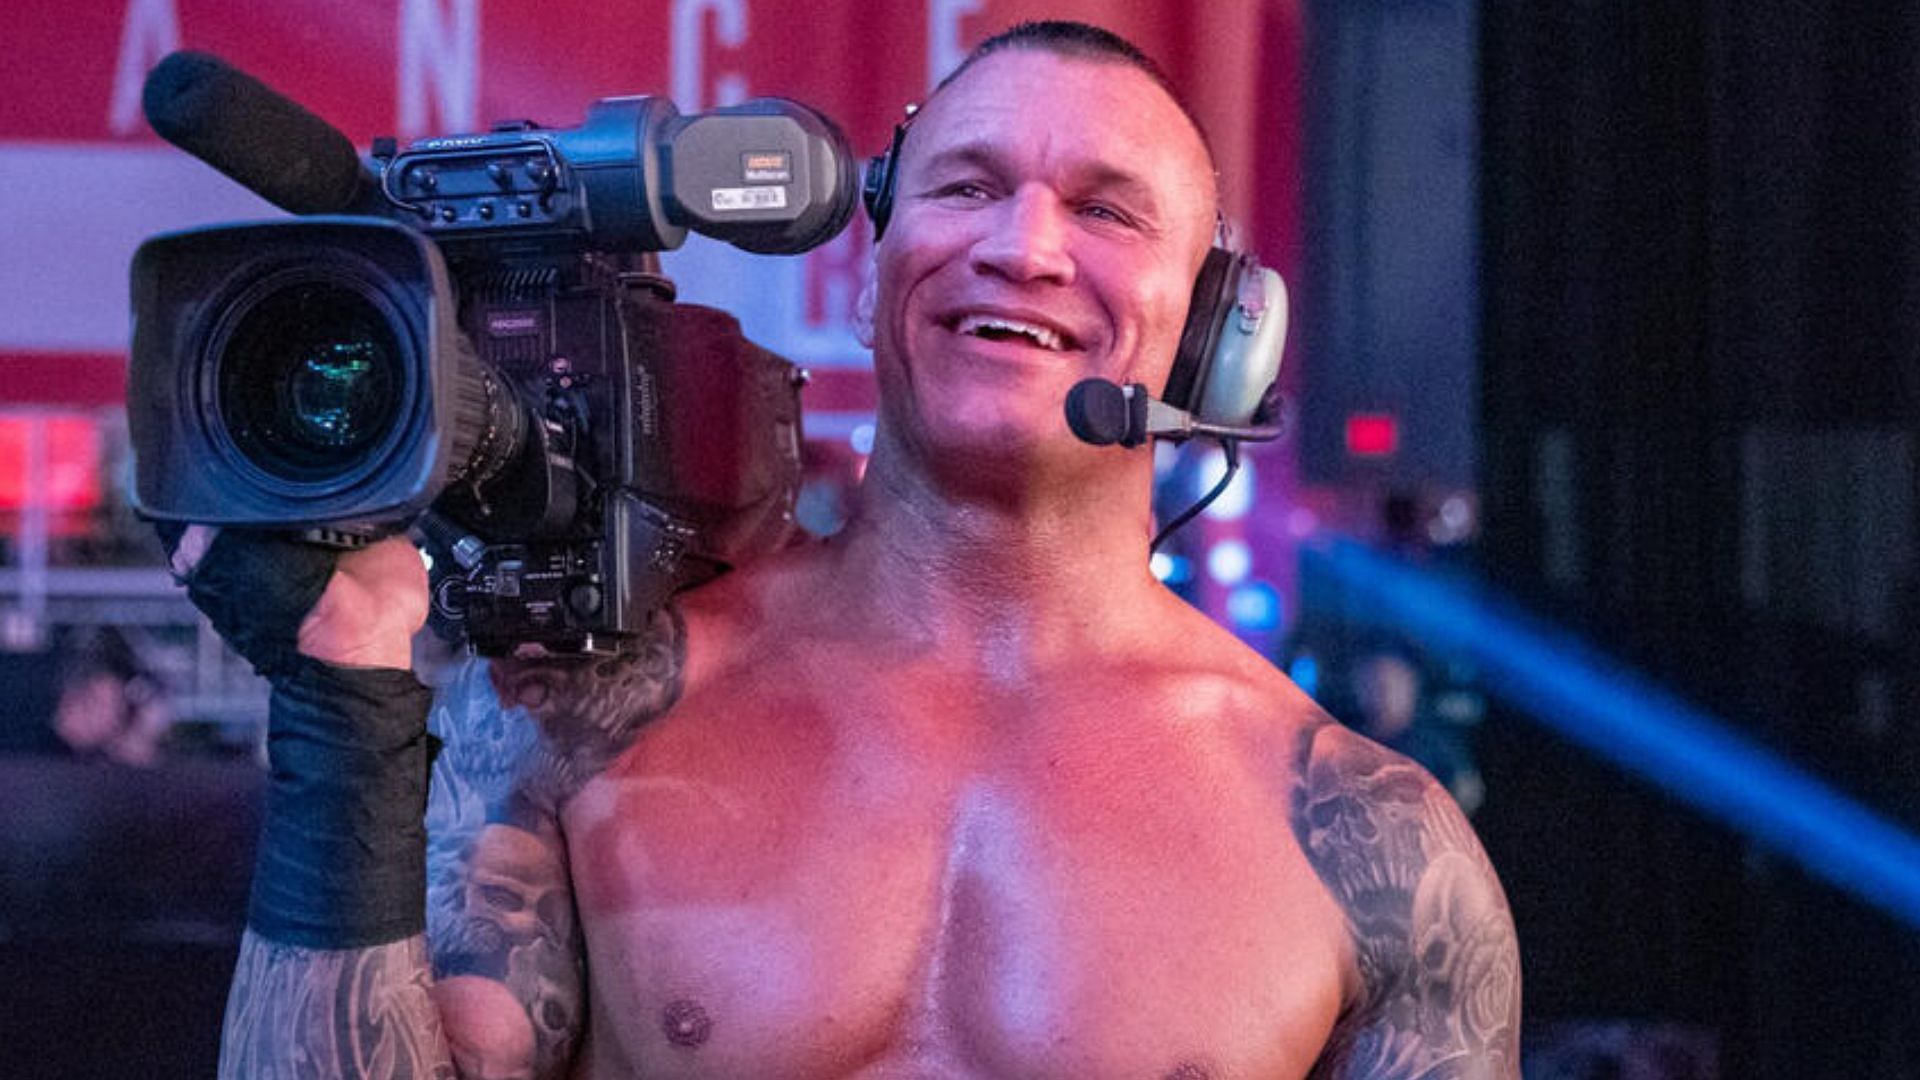 Randy Orton is one of WWE